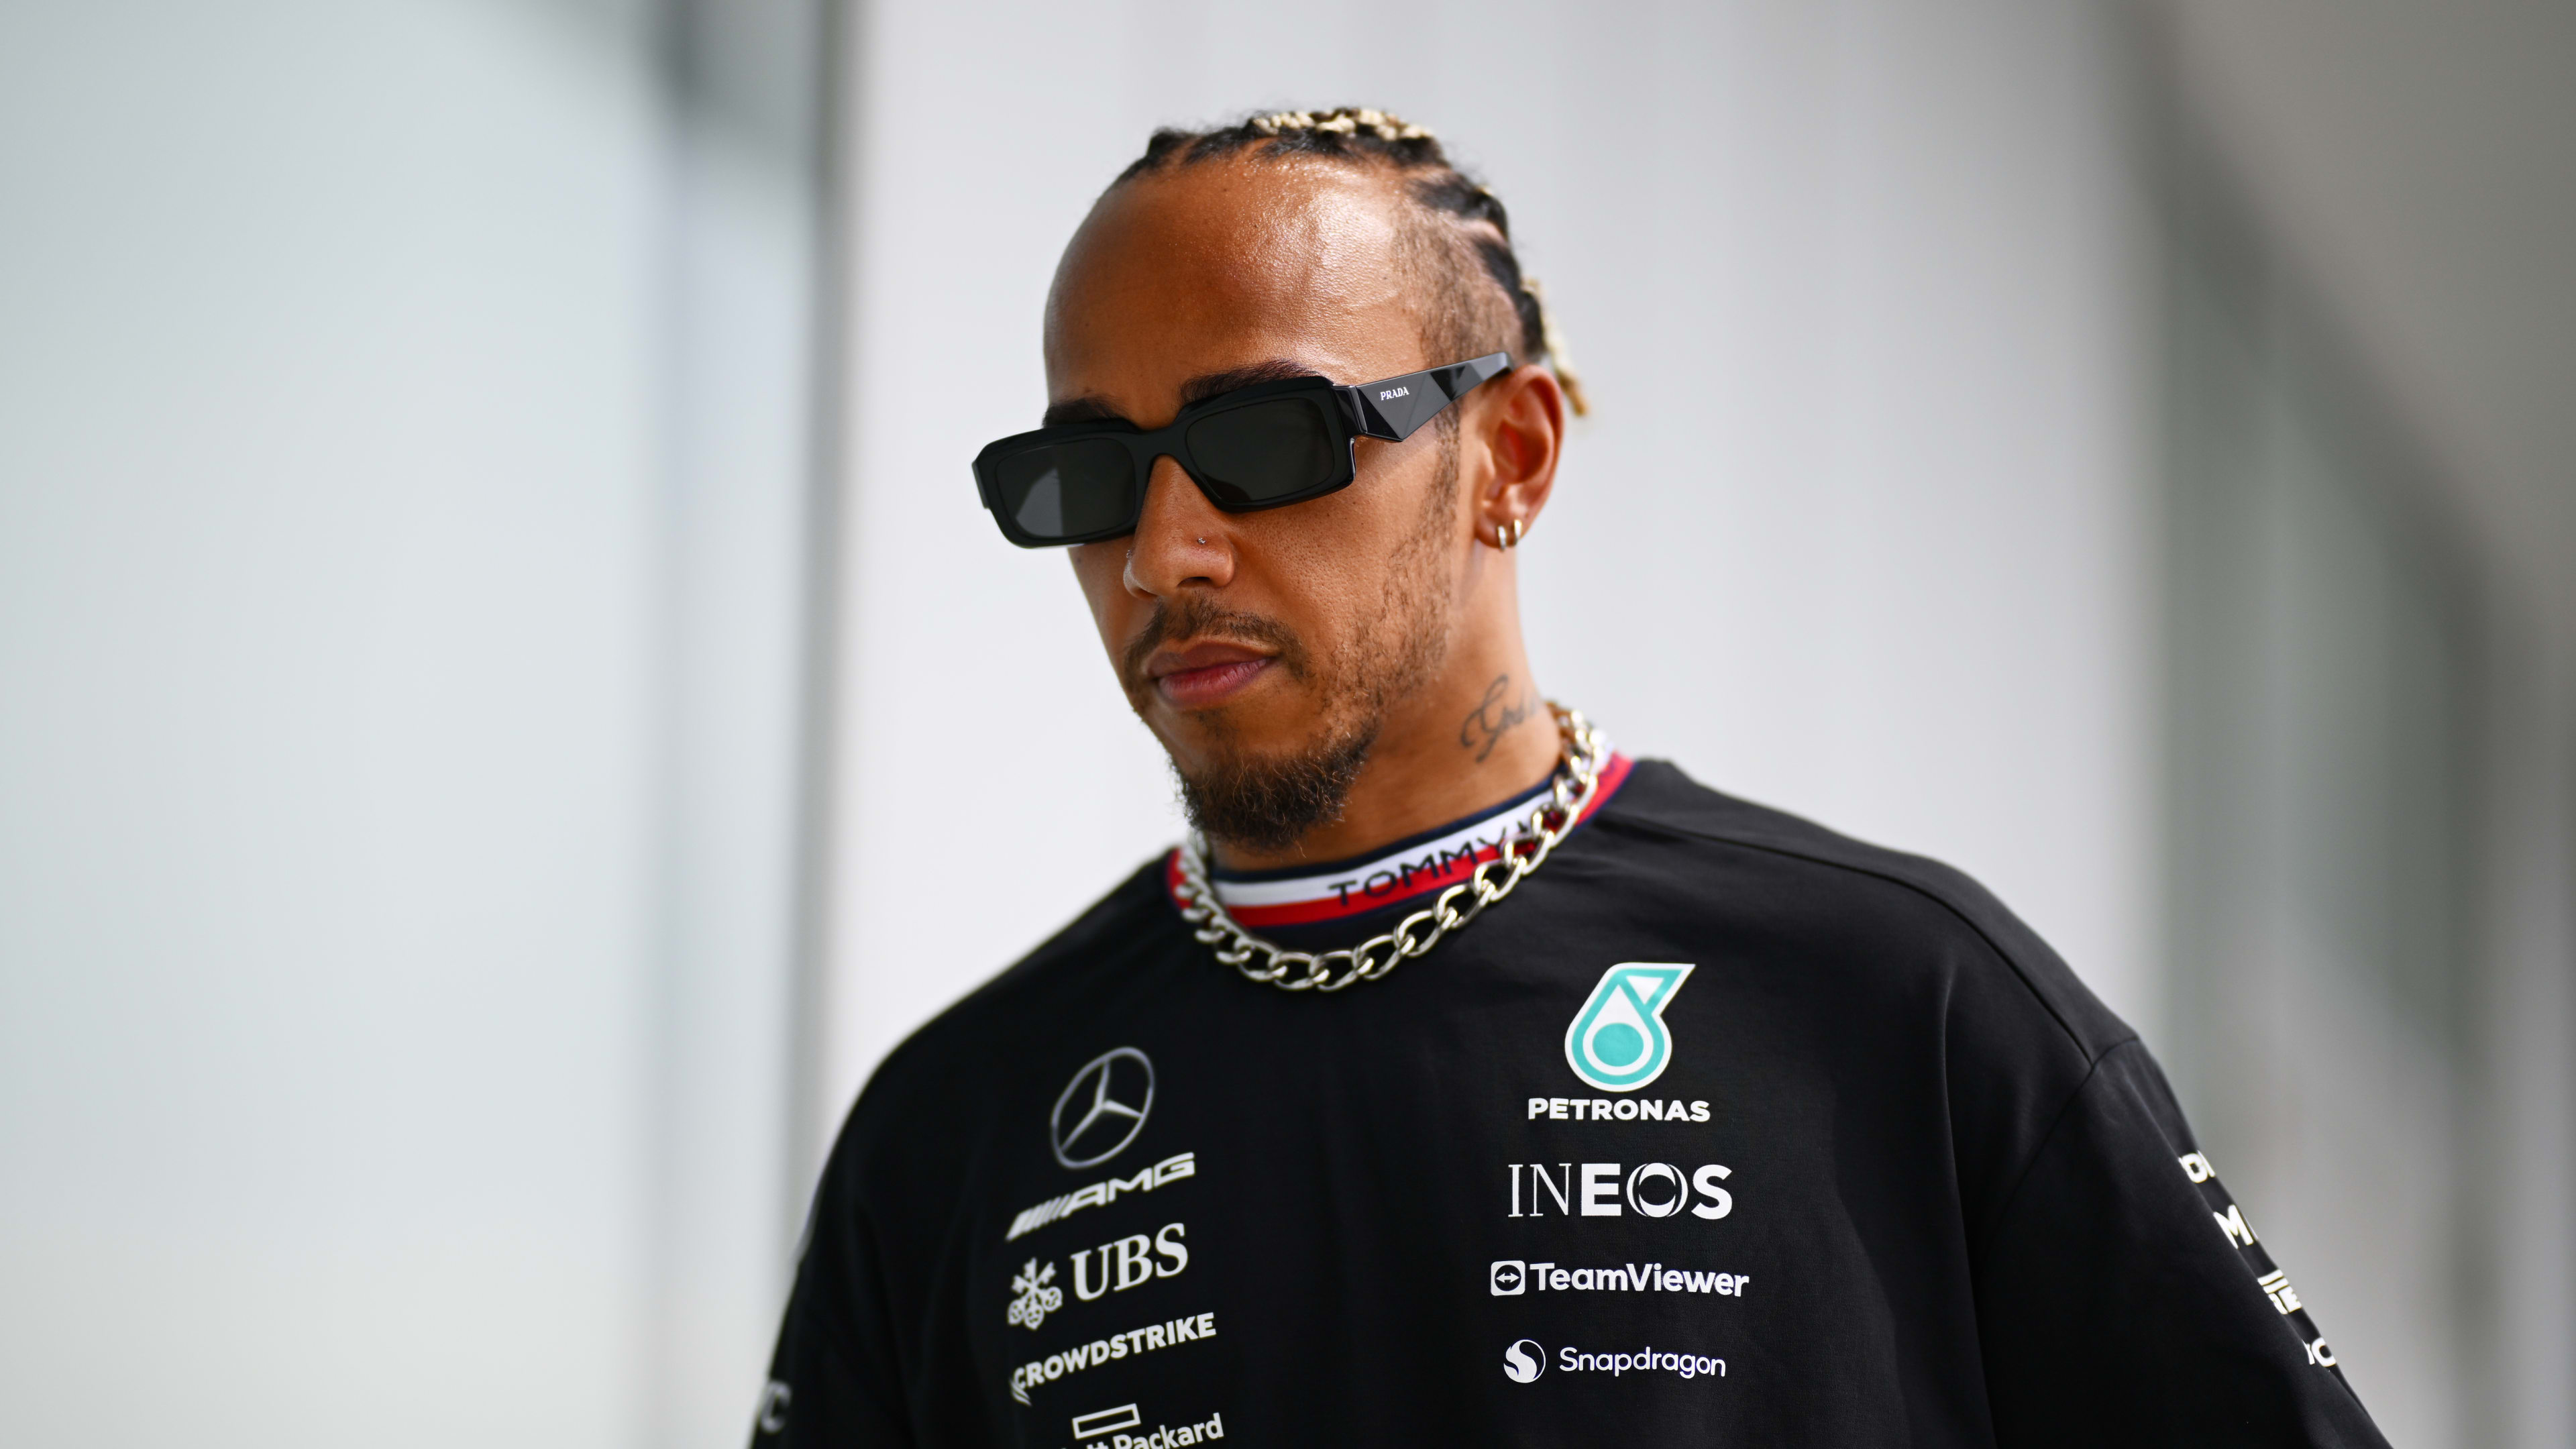 Abu Dhabi Grand Prix 2014: Lewis Hamilton strikes first blow as Mercedes  duo streak clear of the rest of the pack | The Independent | The Independent